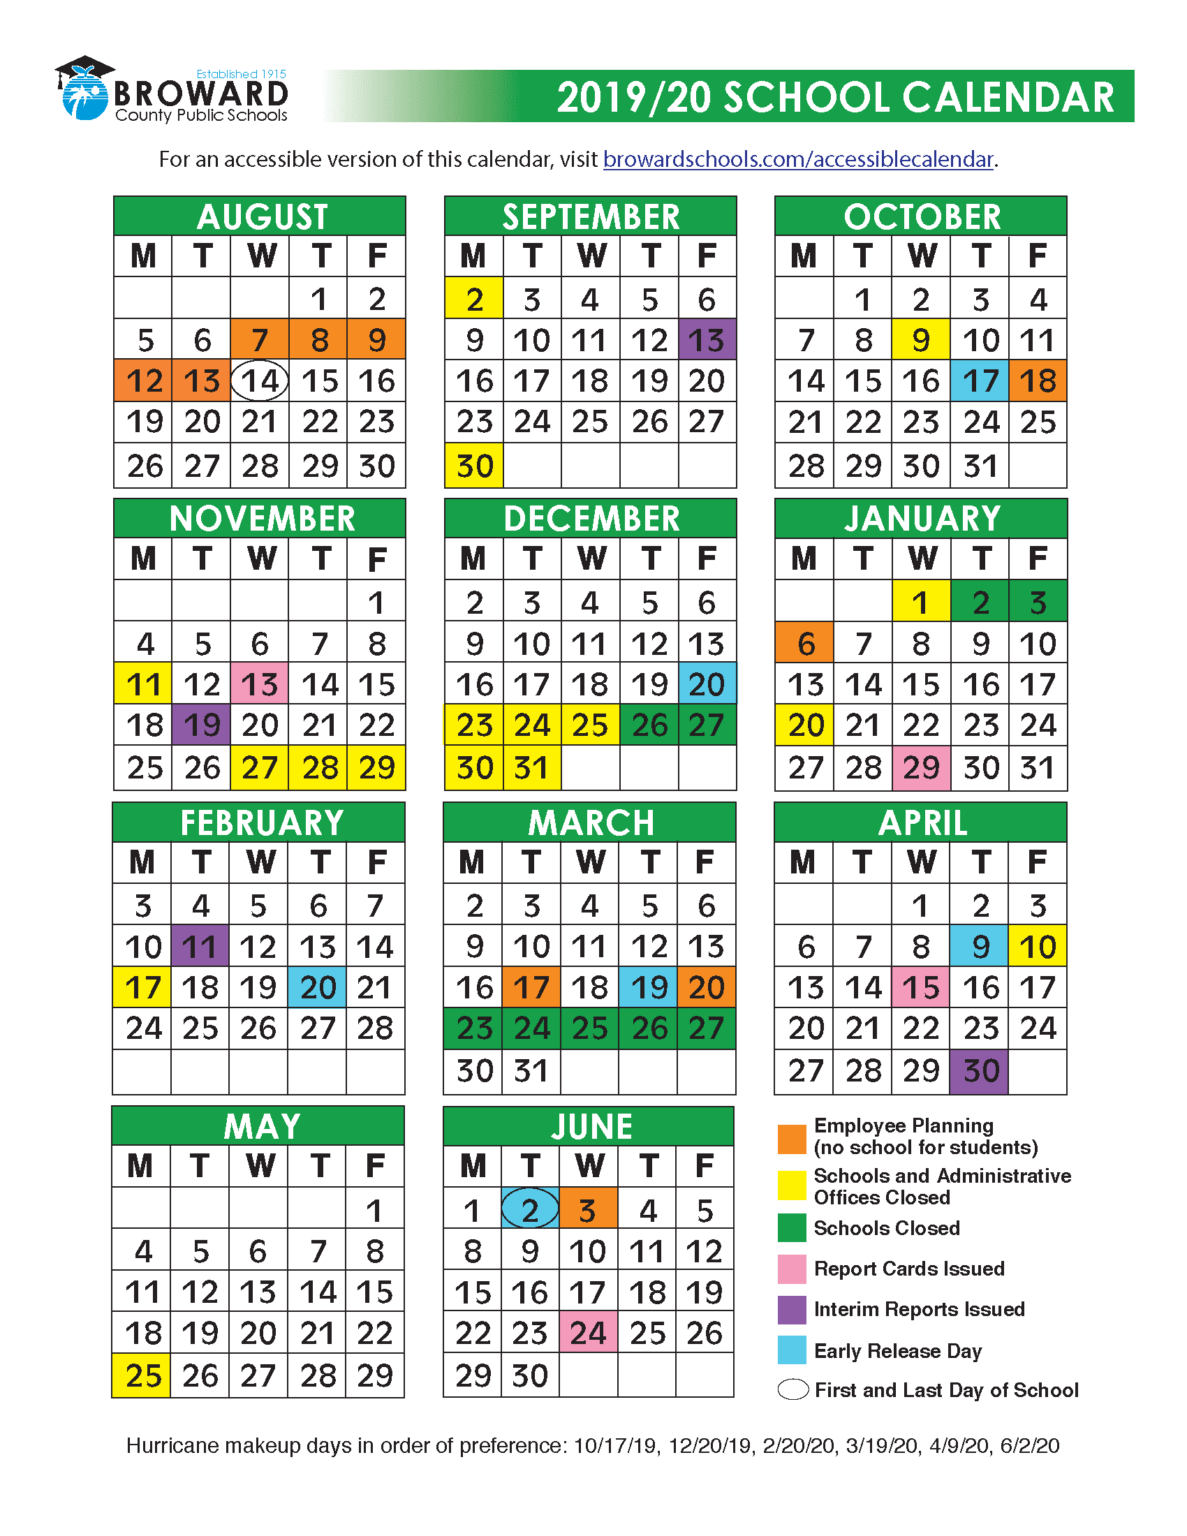 2019 MiamiDade and Broward School Calendars